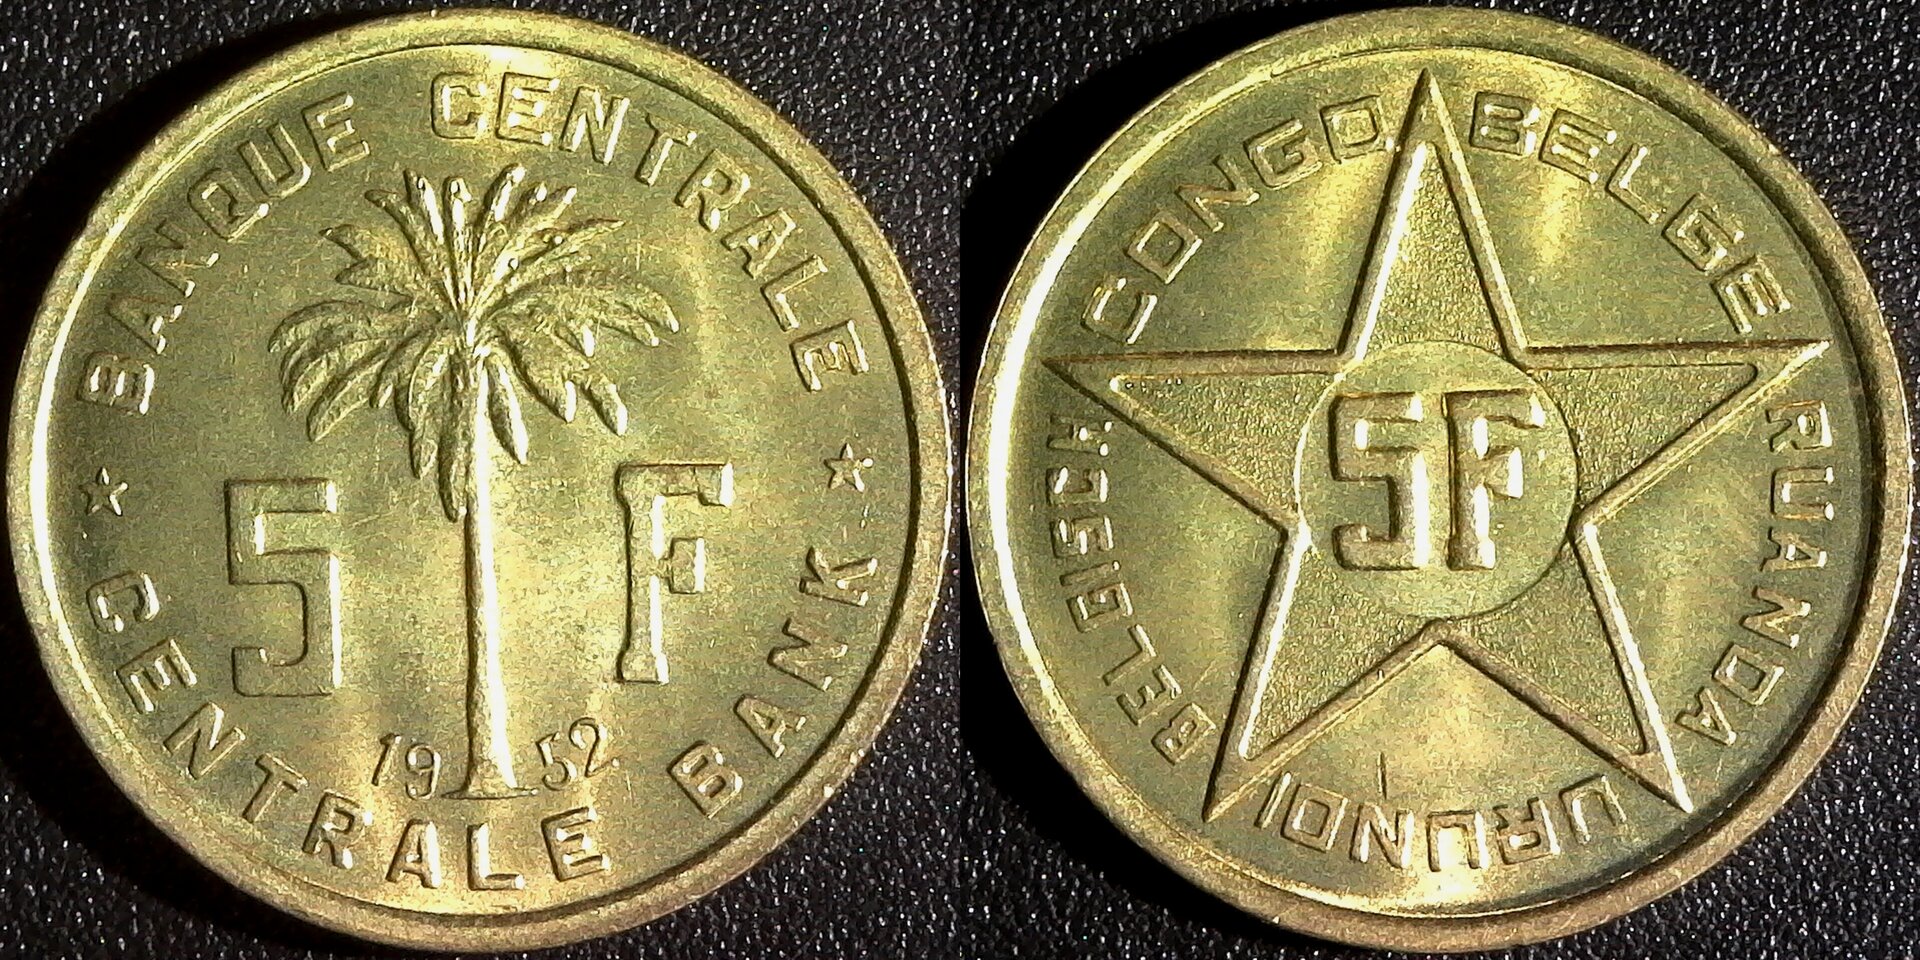 Belgain Congo Ruanda Urundi 5 Francs 1952 REV a-side.jpg